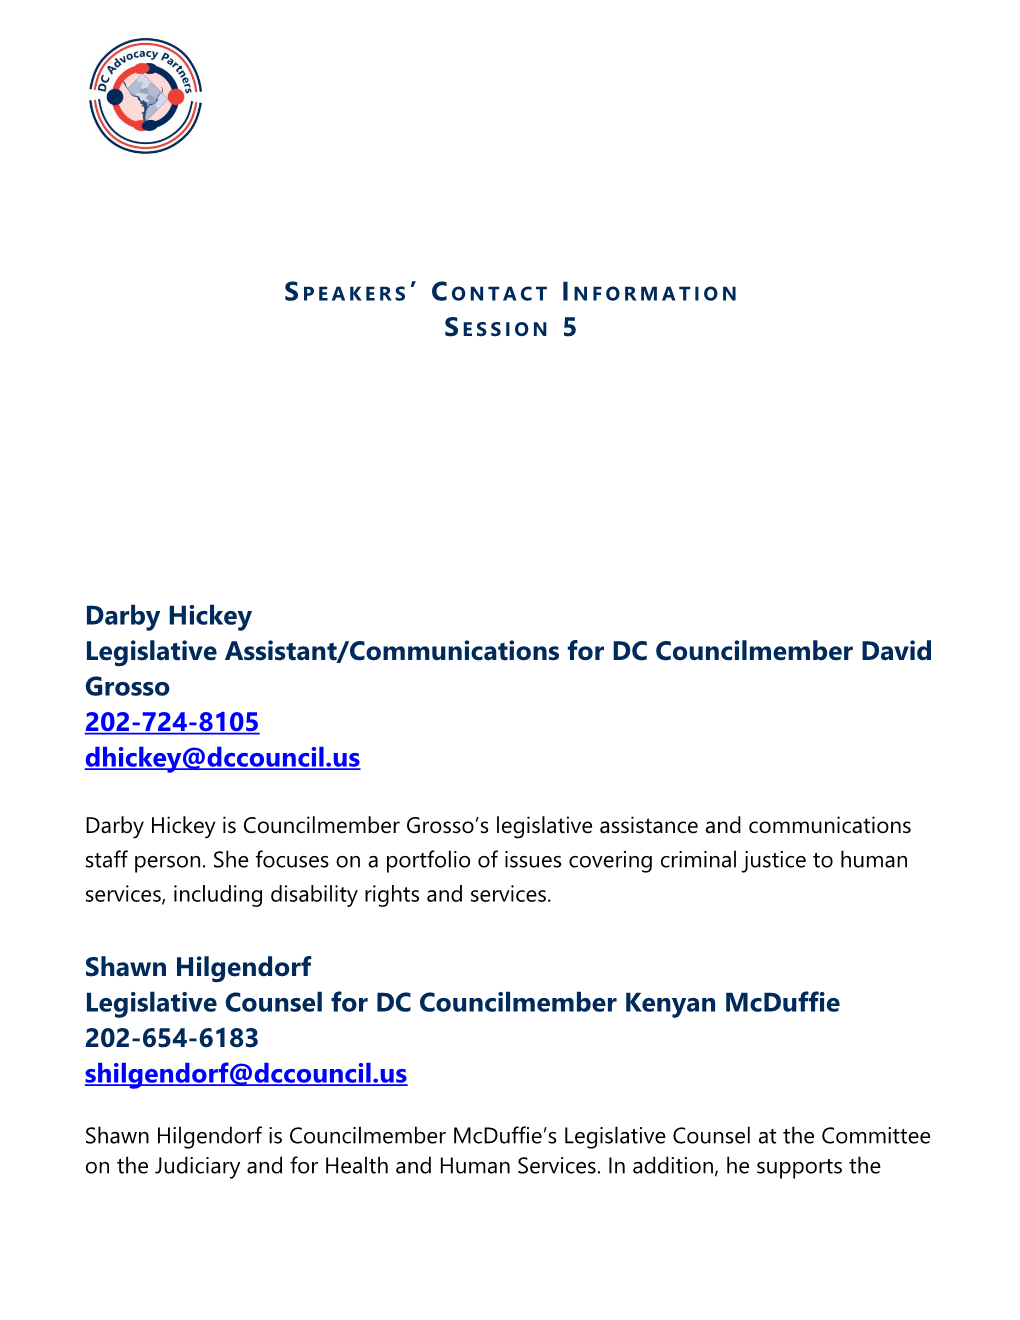 Legislative Assistant/Communications for DC Councilmember David Grosso